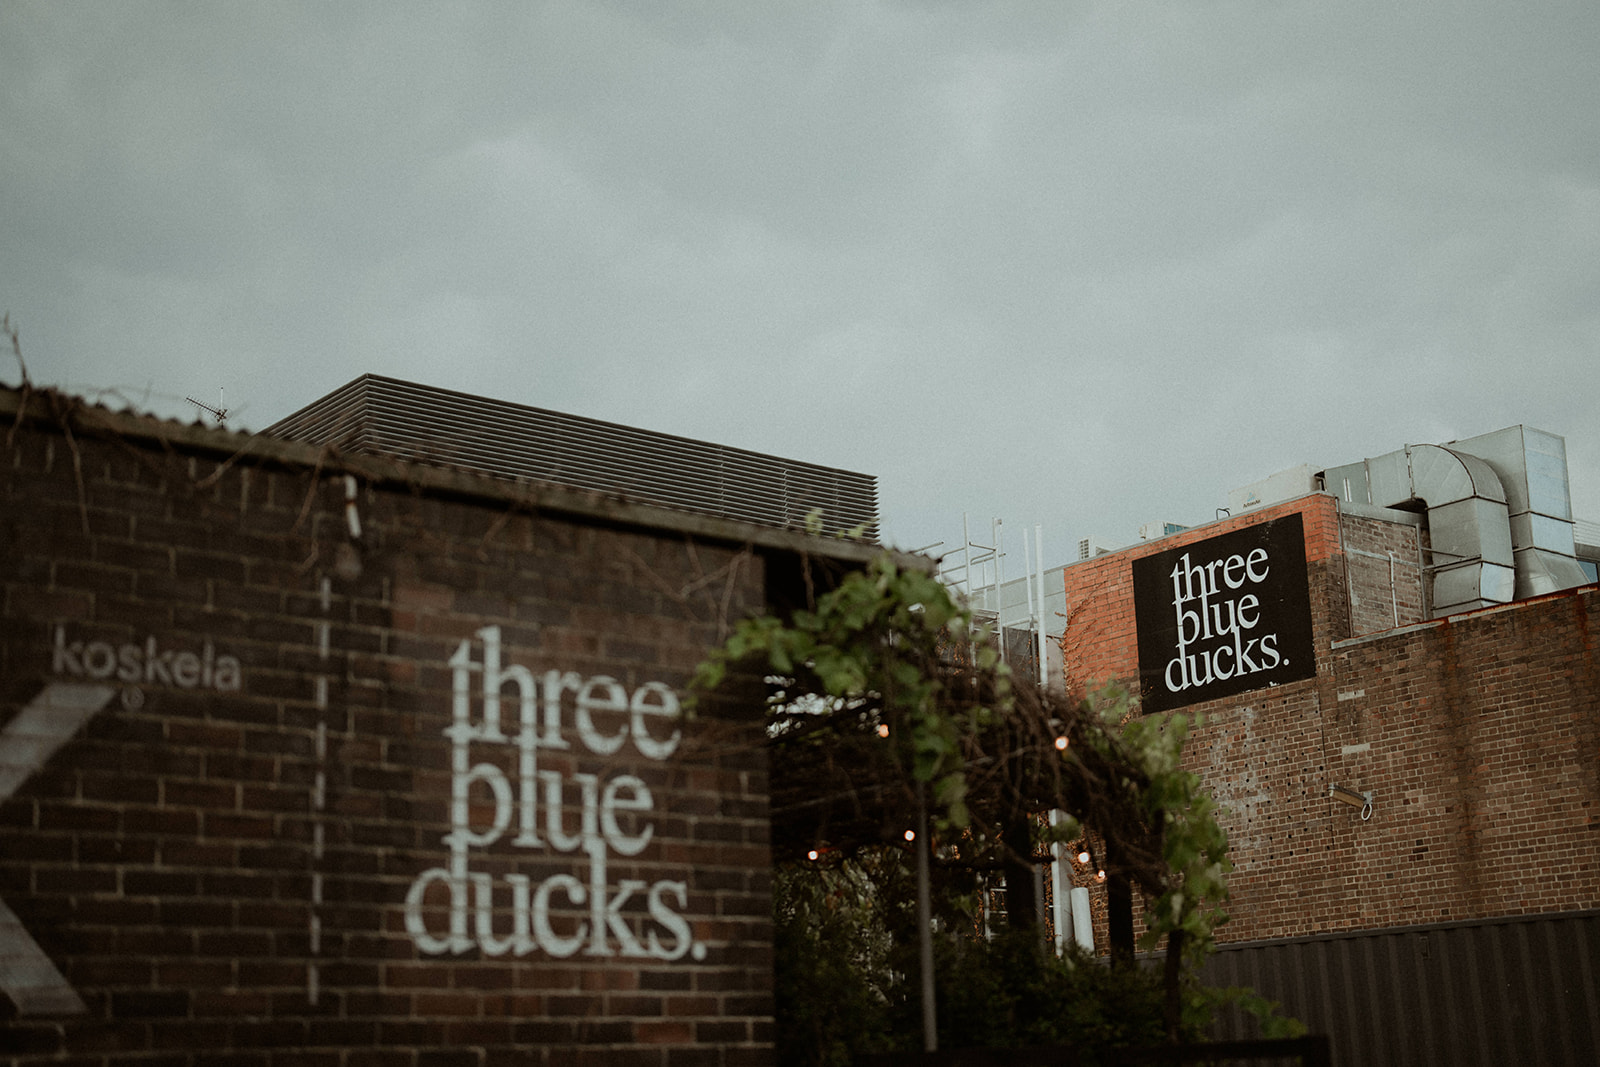 Three blue ducks signage